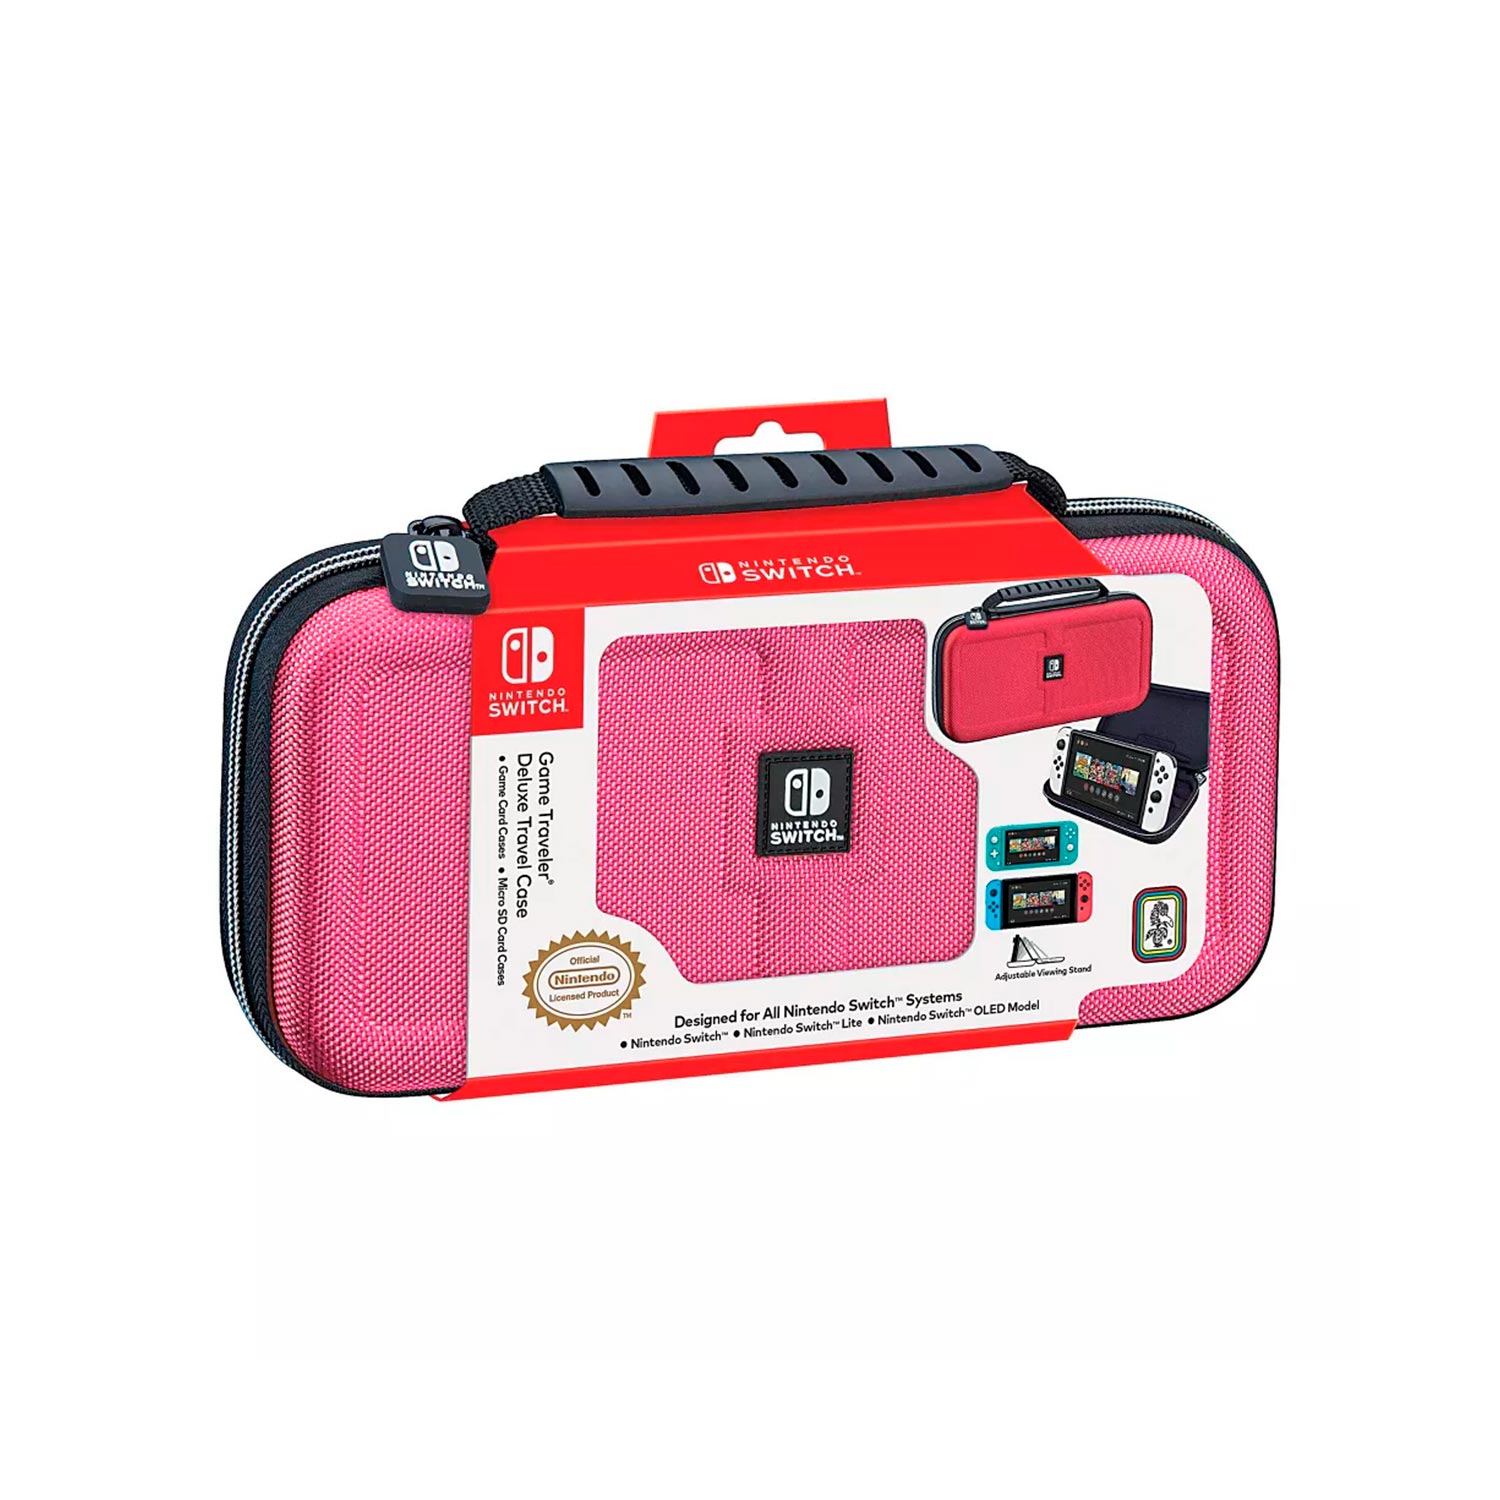 Estuche Game Traveler Deluxe Travel Case Pink Black Nintendo Switch Oled